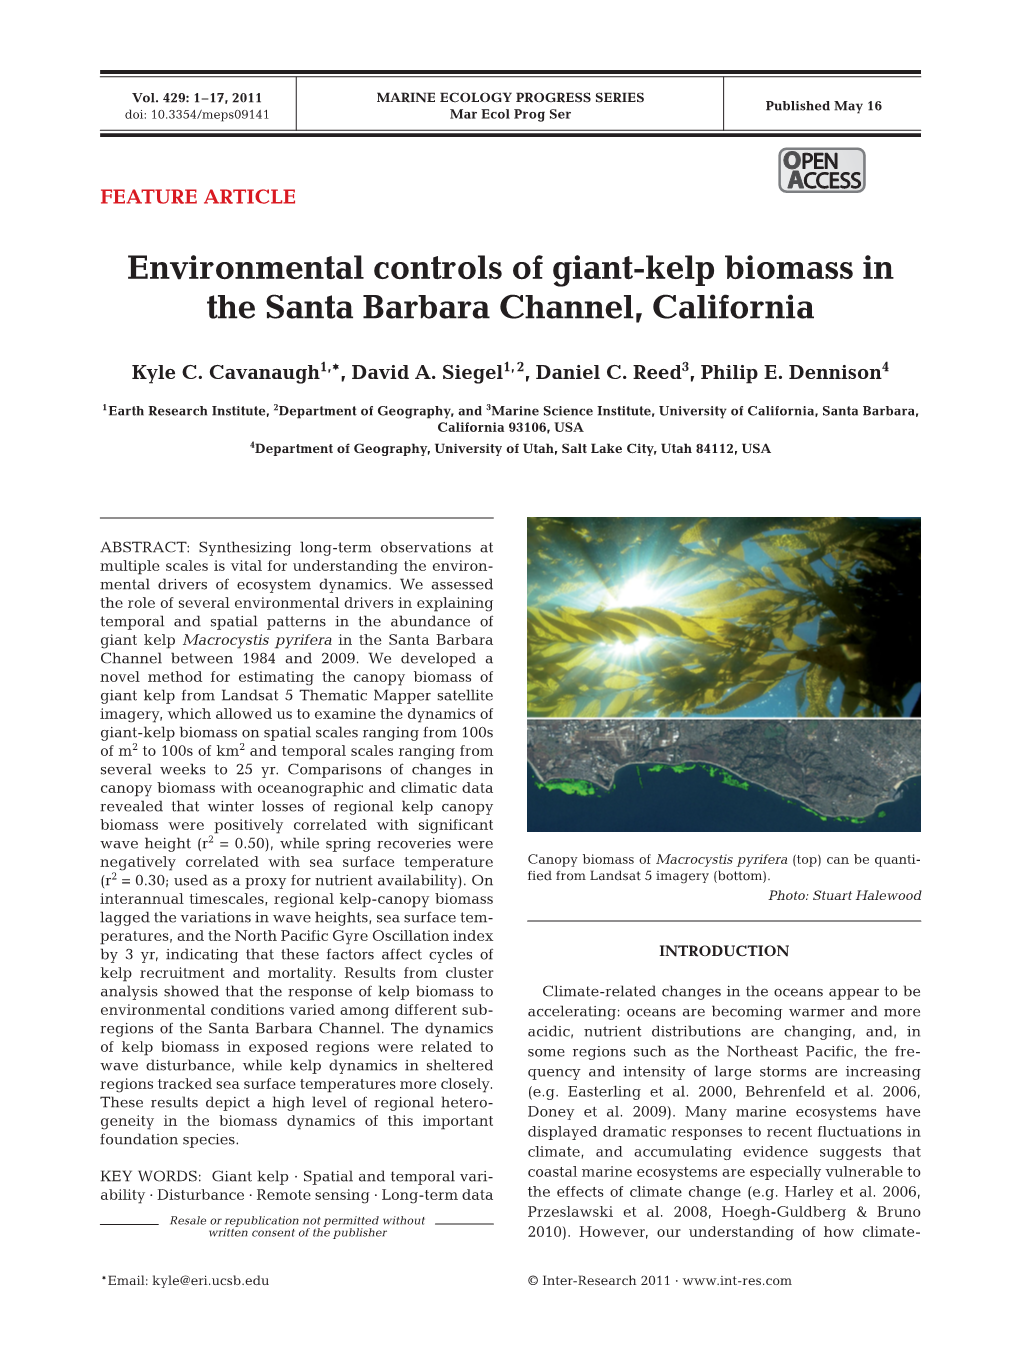 Environmental Controls of Giant-Kelp Biomass in the Santa Barbara Channel, California